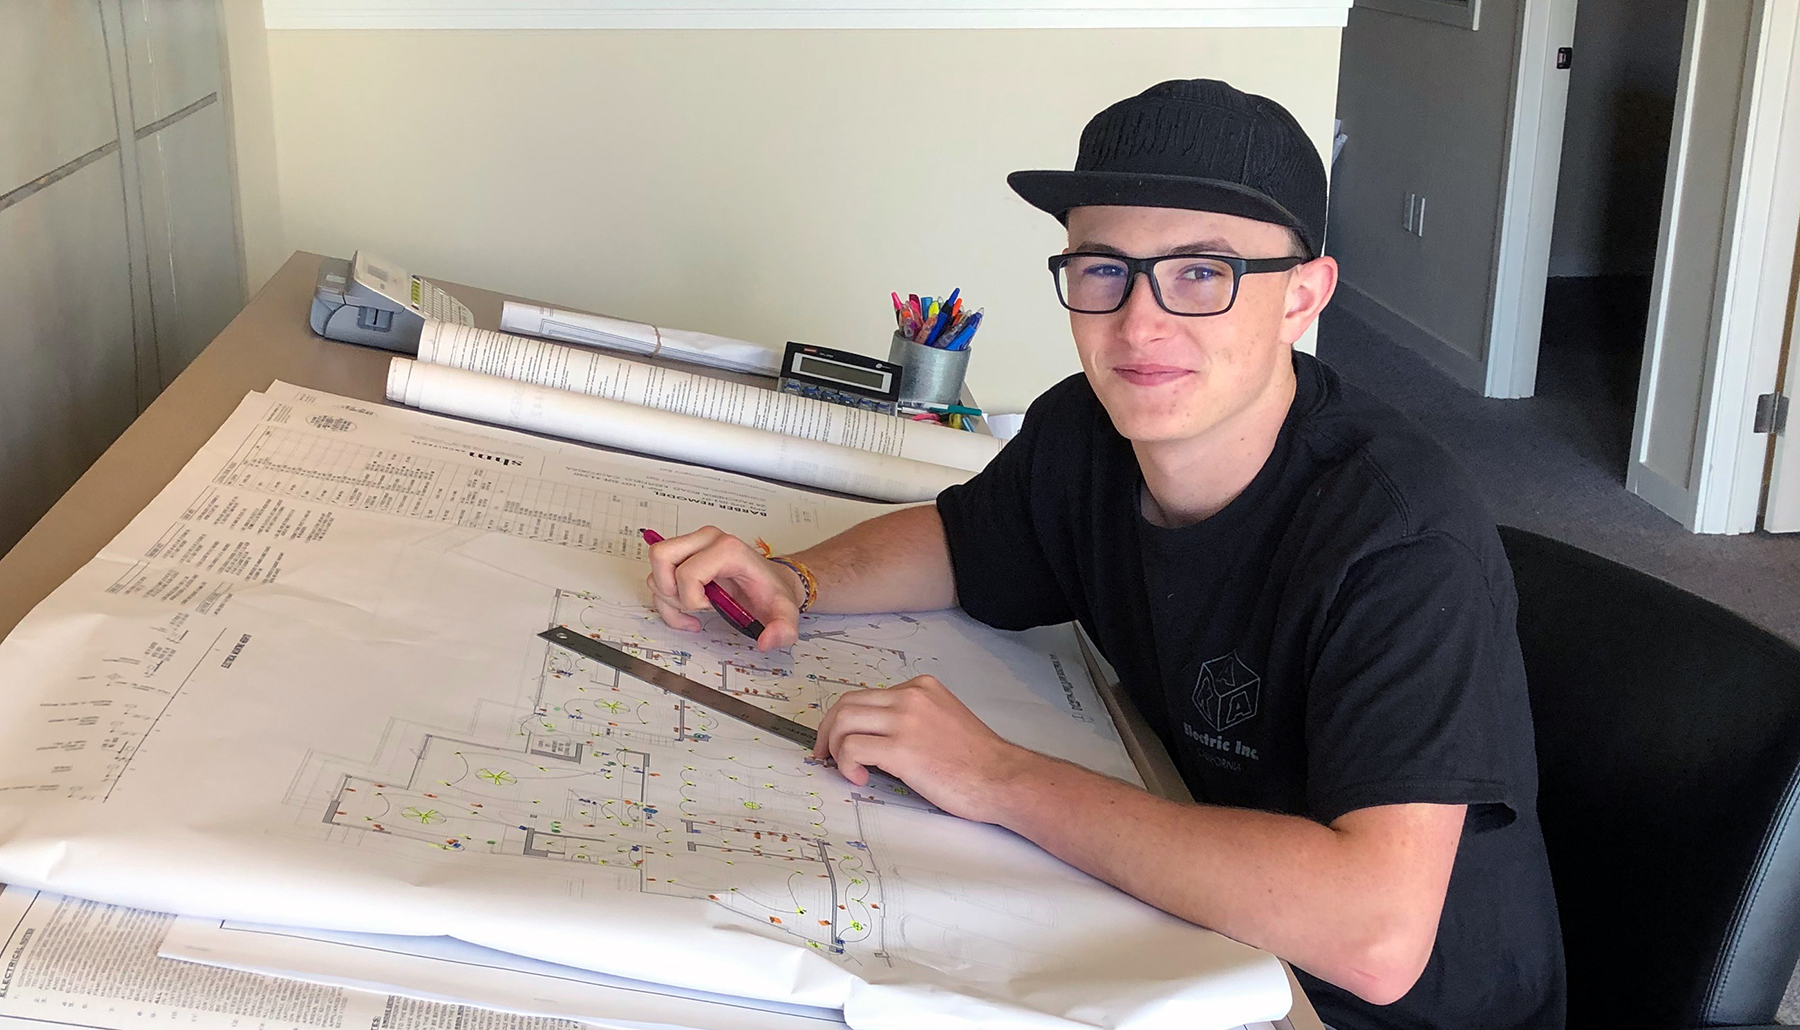 Pathways Program participant Graysen sits at his internship desk reviewing a building's electrical plans.